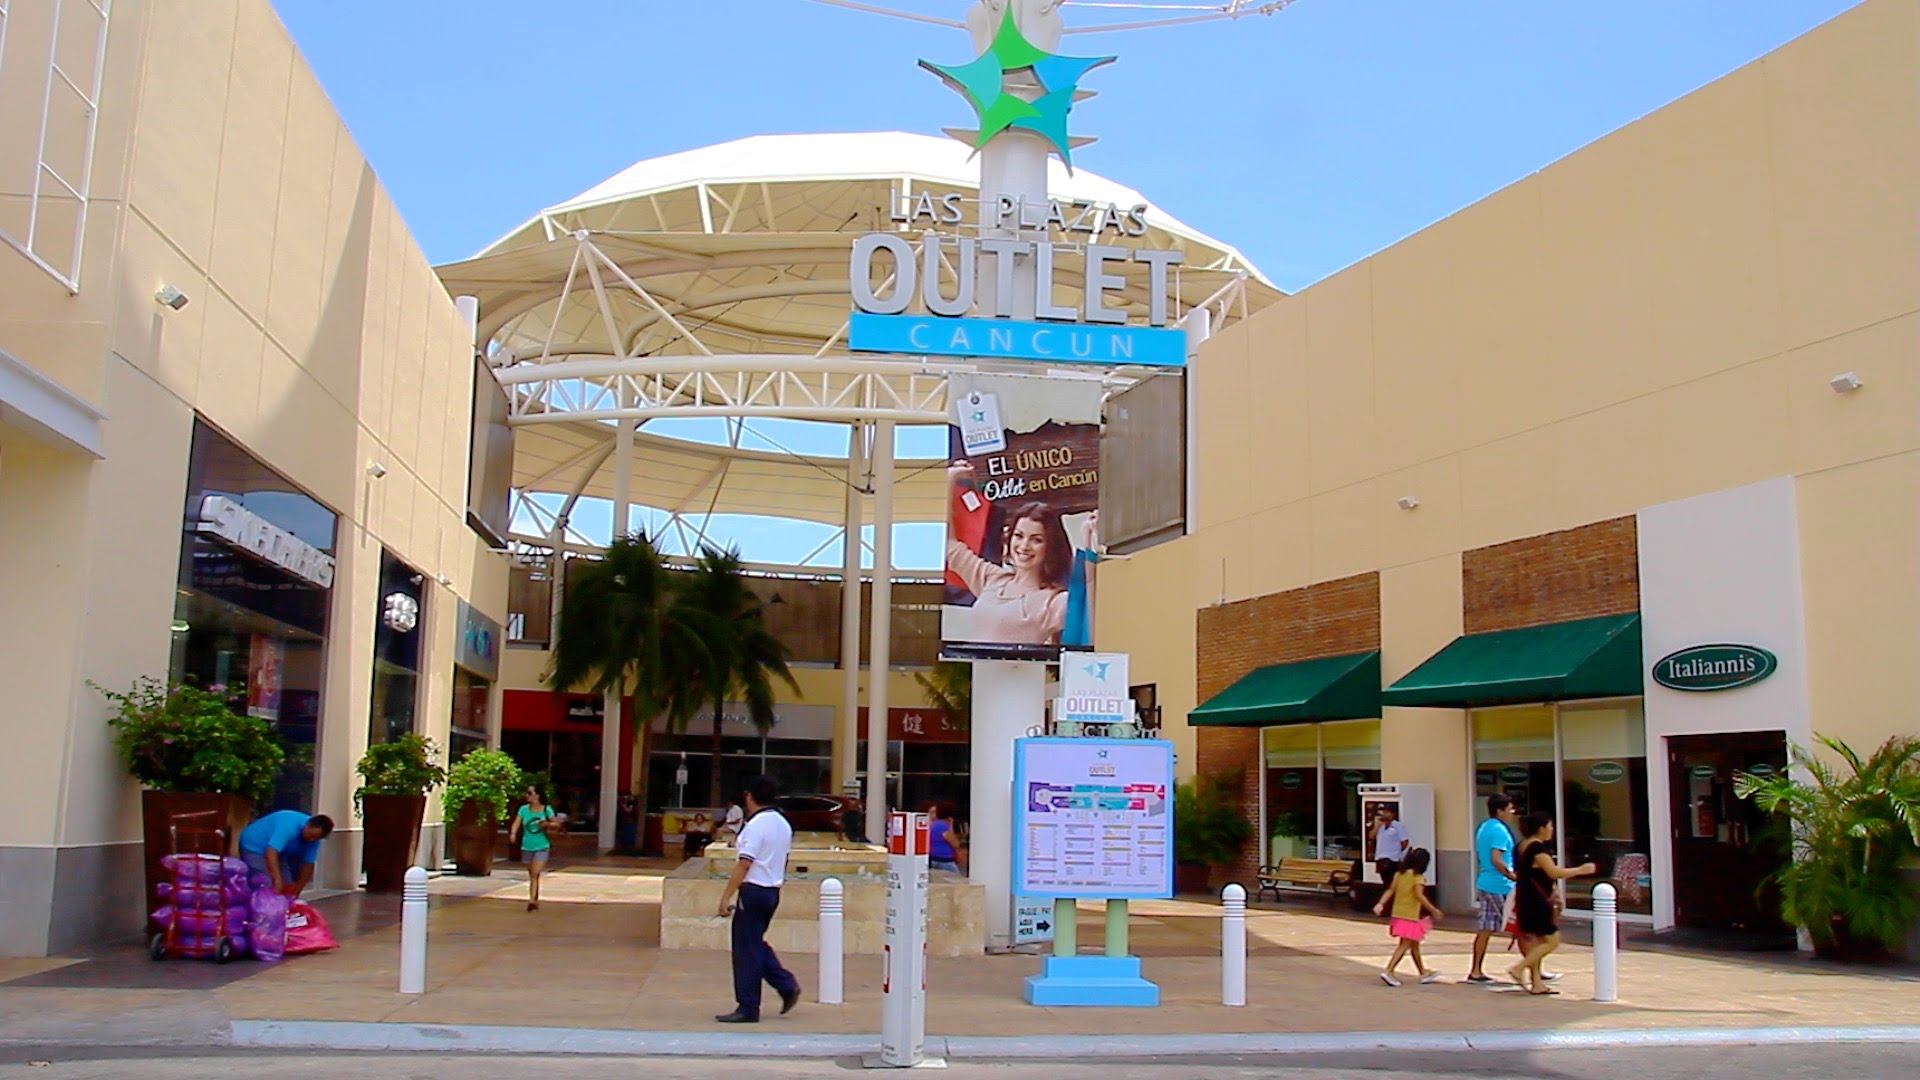 Plaza comercial Outlet en Cancún